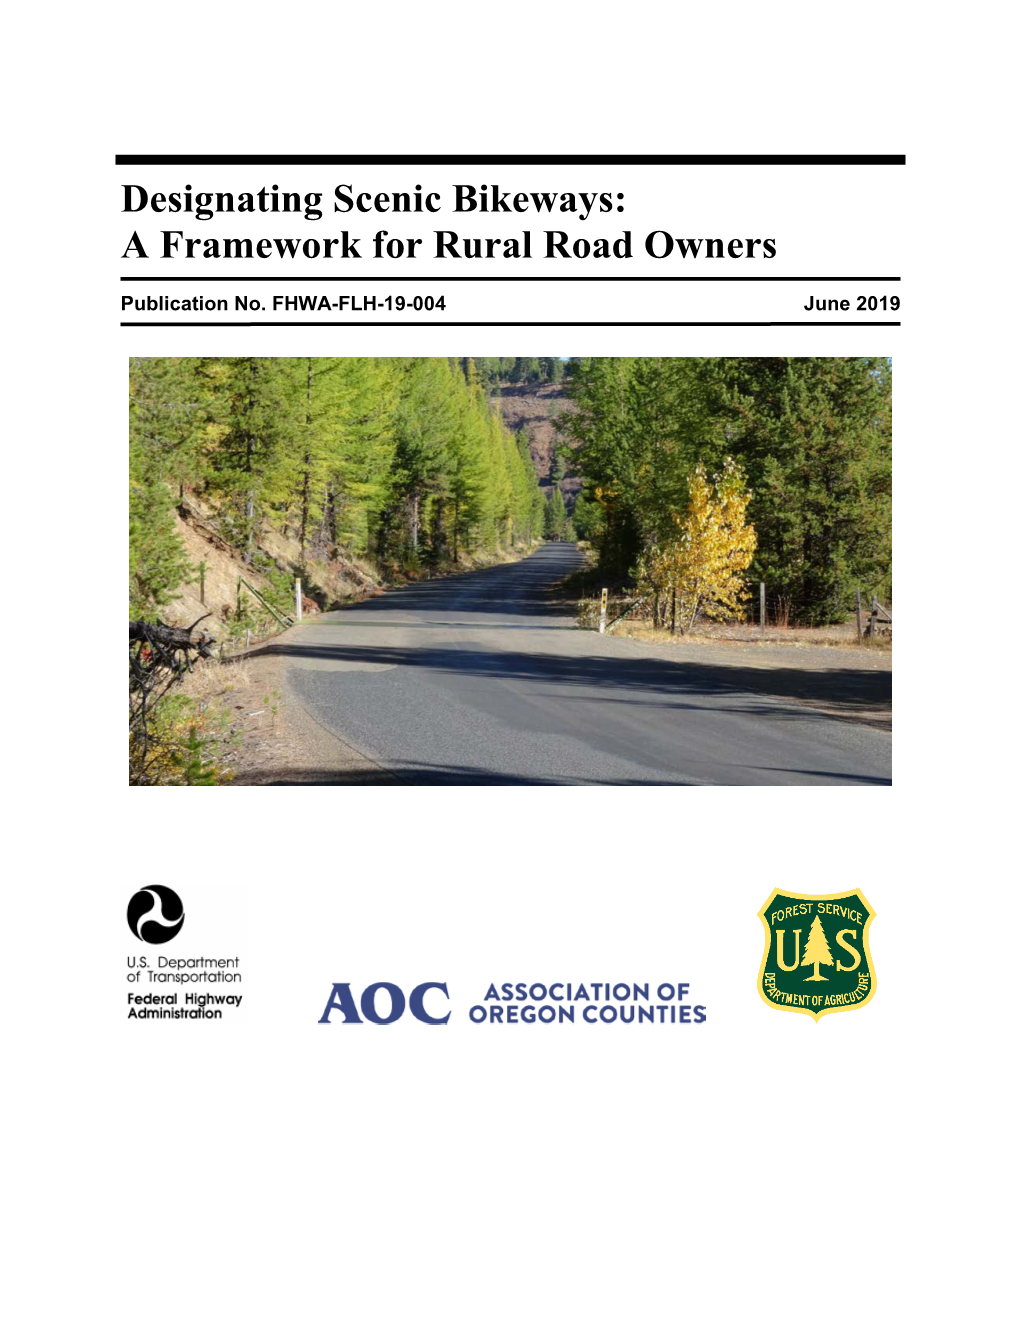 Designating Scenic Bikeways: a Framework for Rural Road Owners